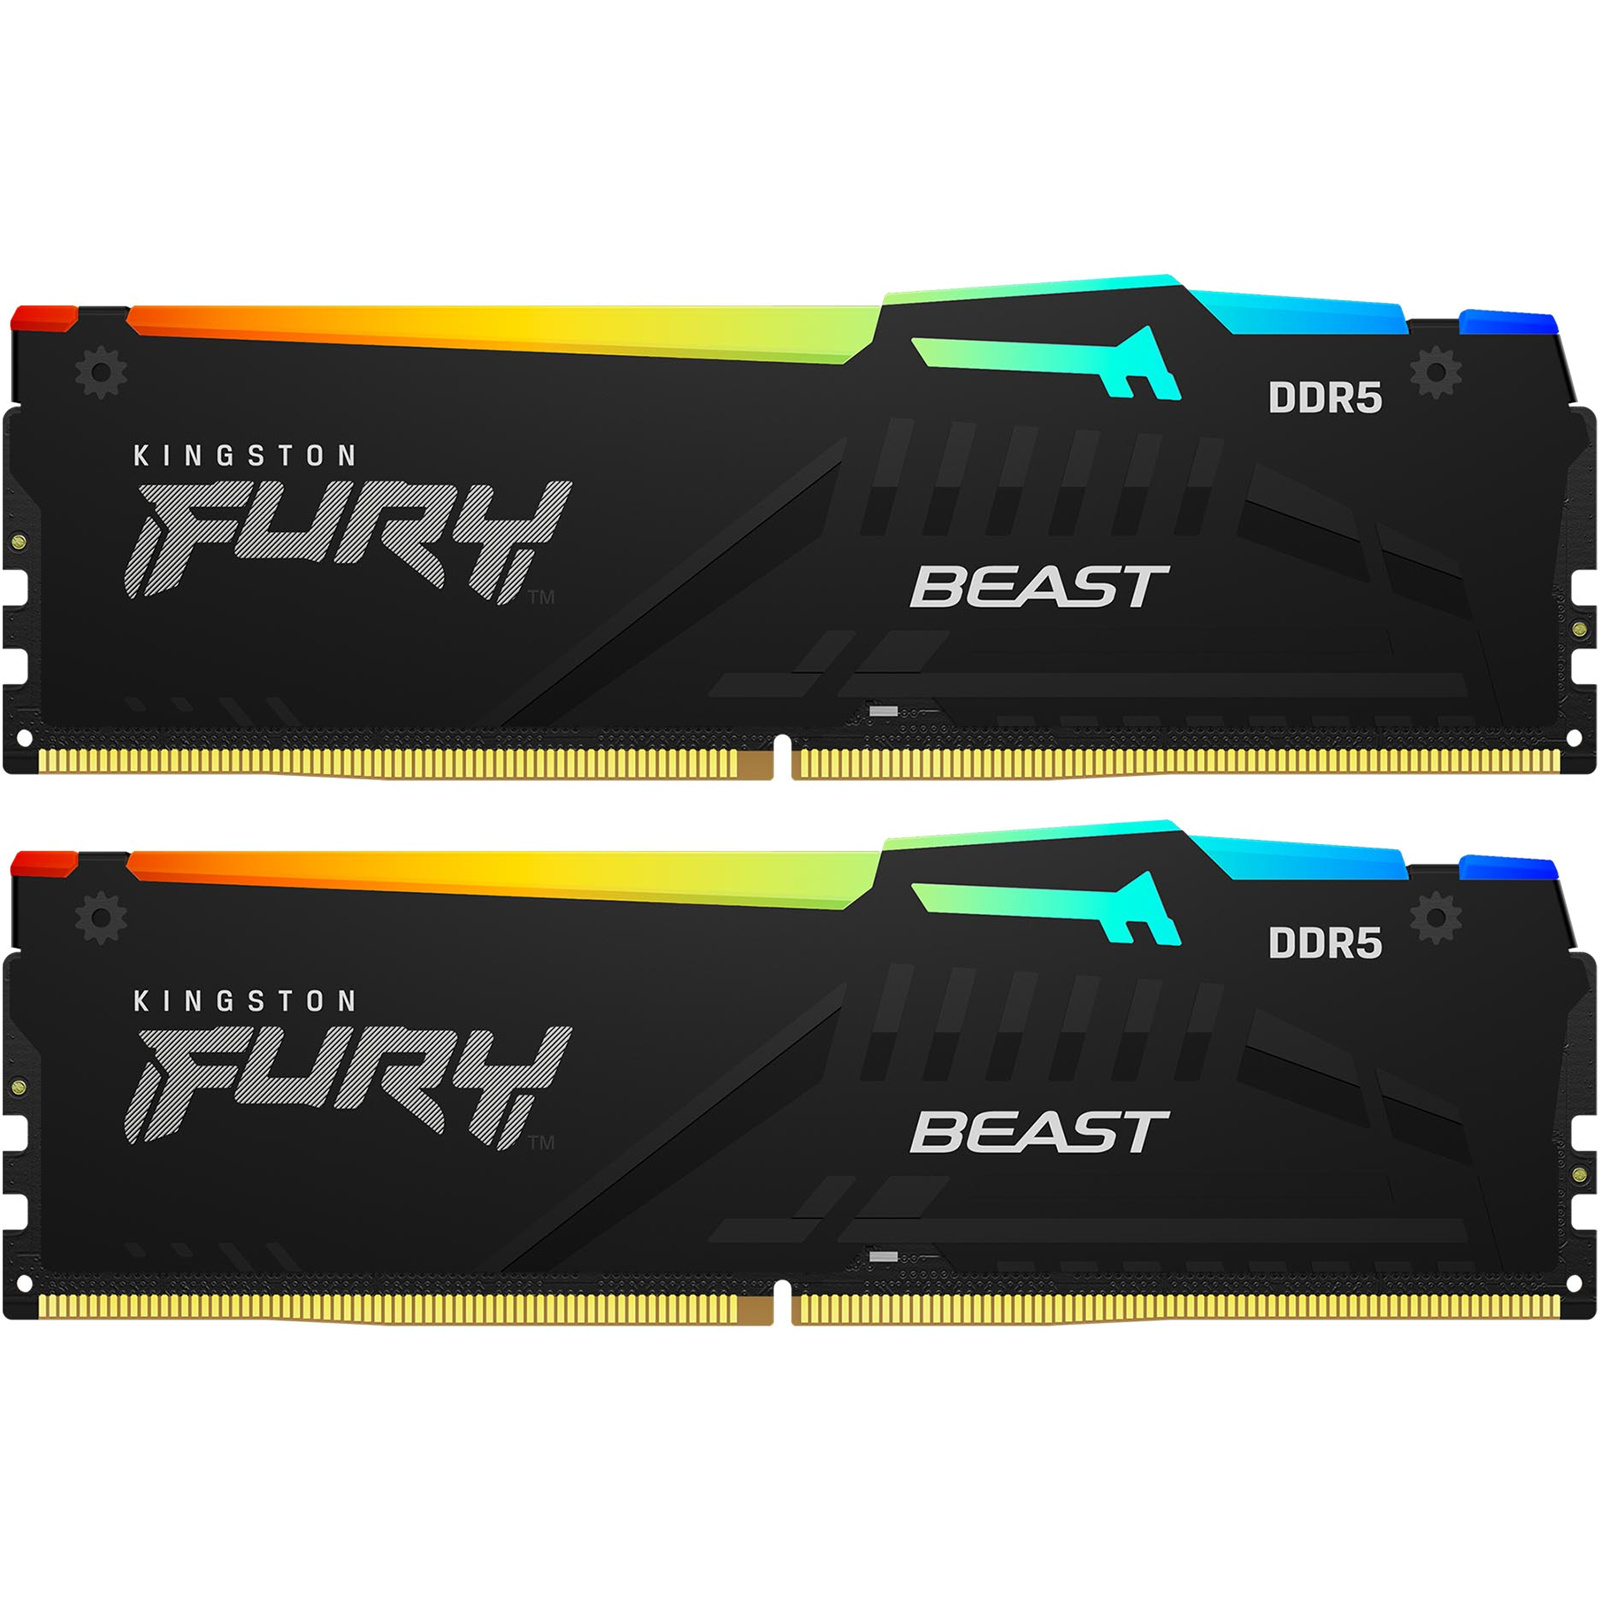 Buy the Kingston Fury RGB Beast 16GB DDR4 RGB Desktop RAM Kit